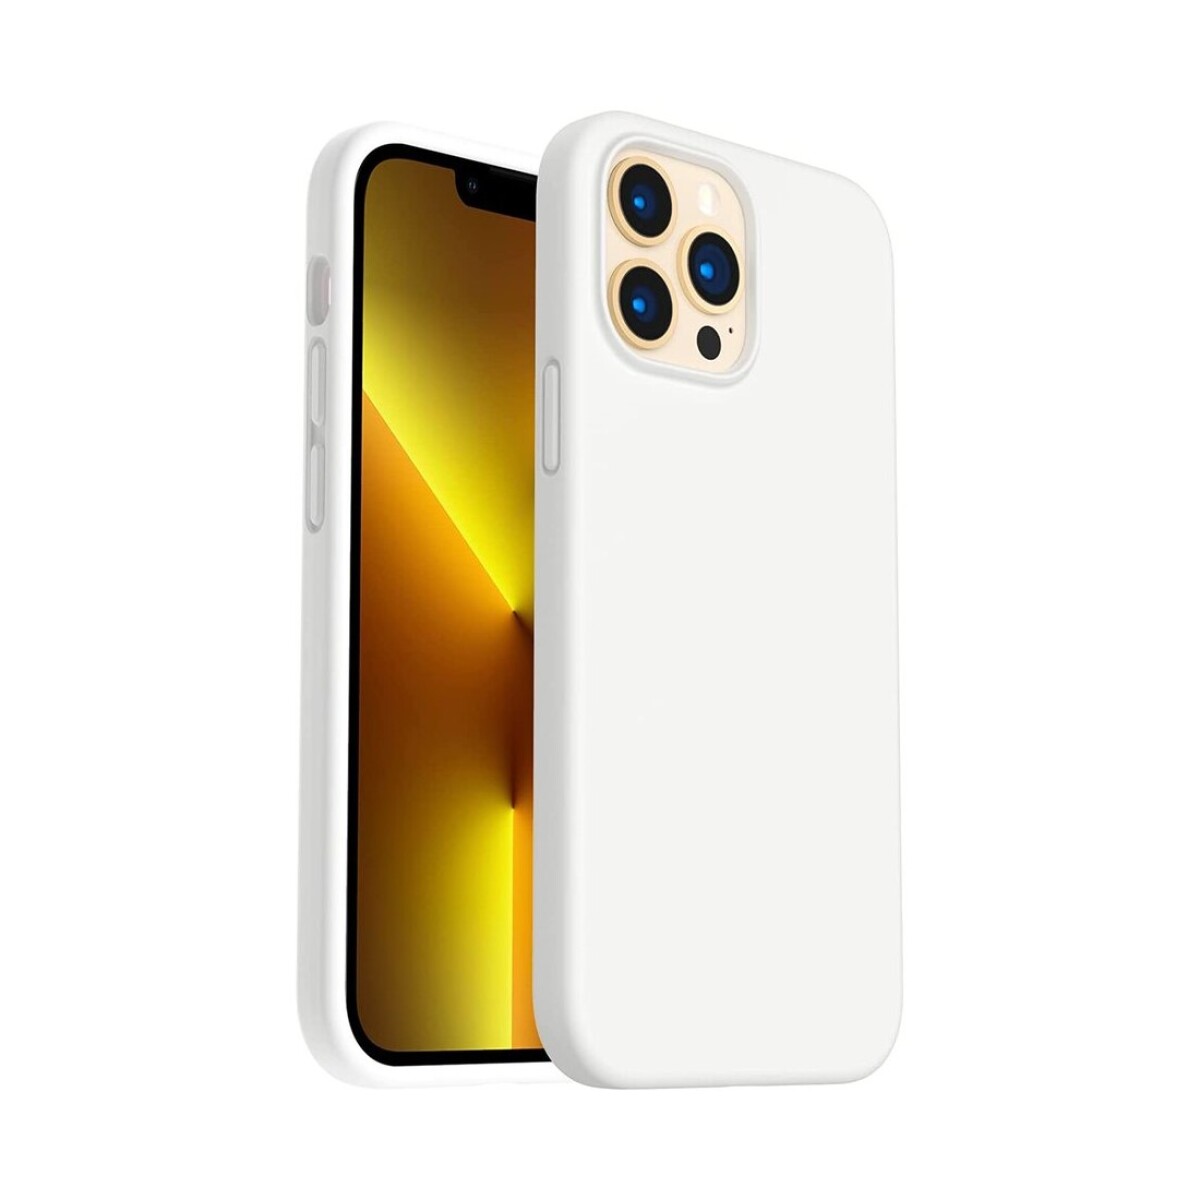 Protector case de silicona para iphone 13 pro max - Ivory white 